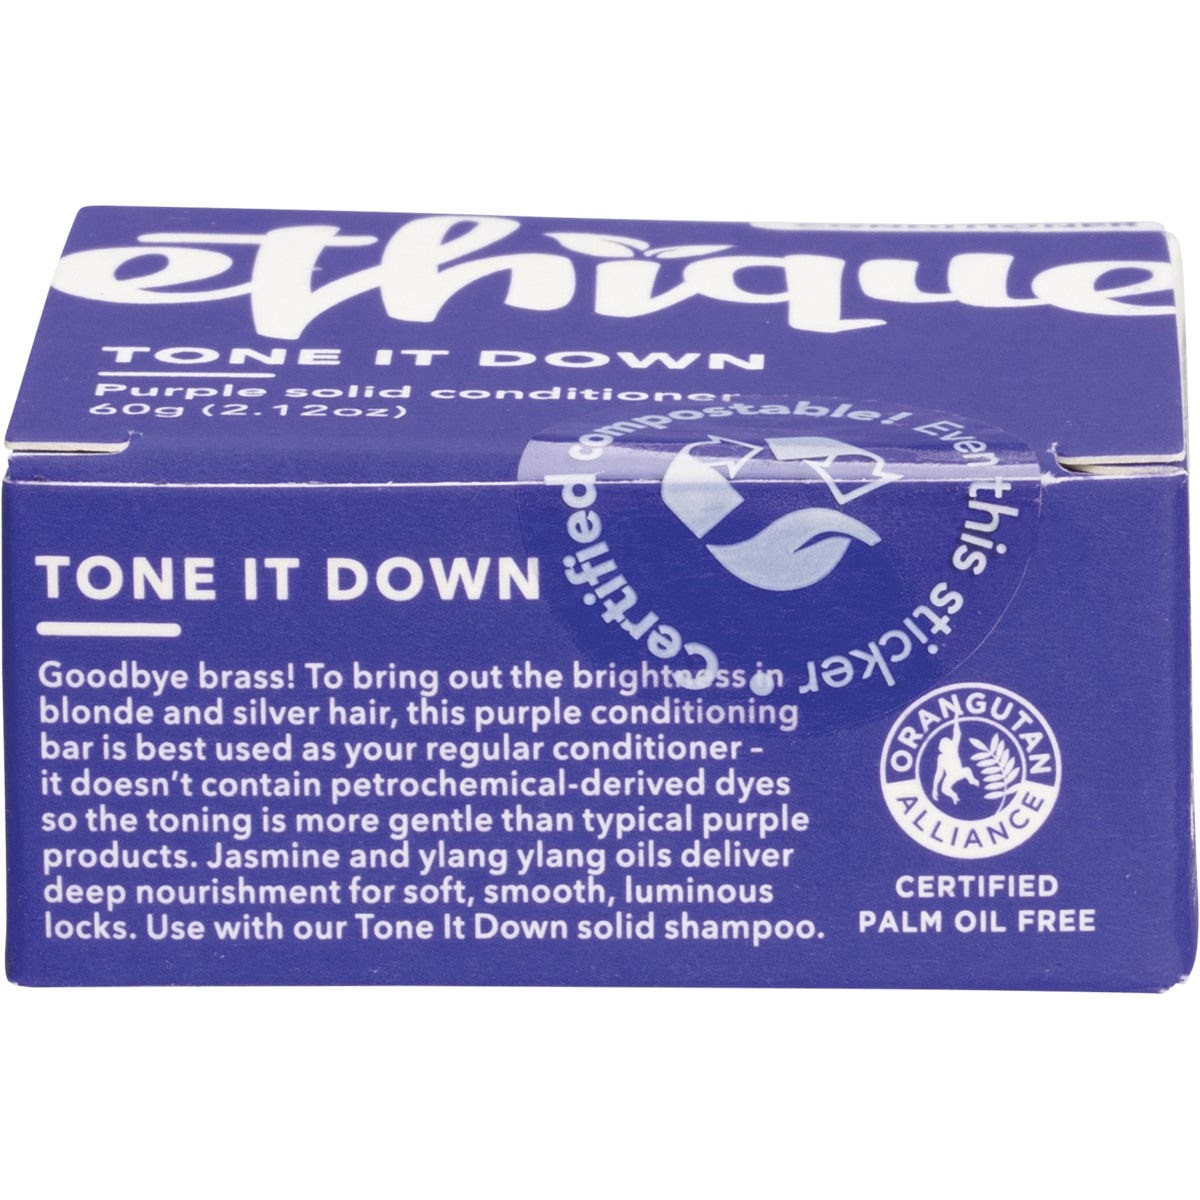 Ethique Solid Conditioner Bar Tone It Down - Purple 60g